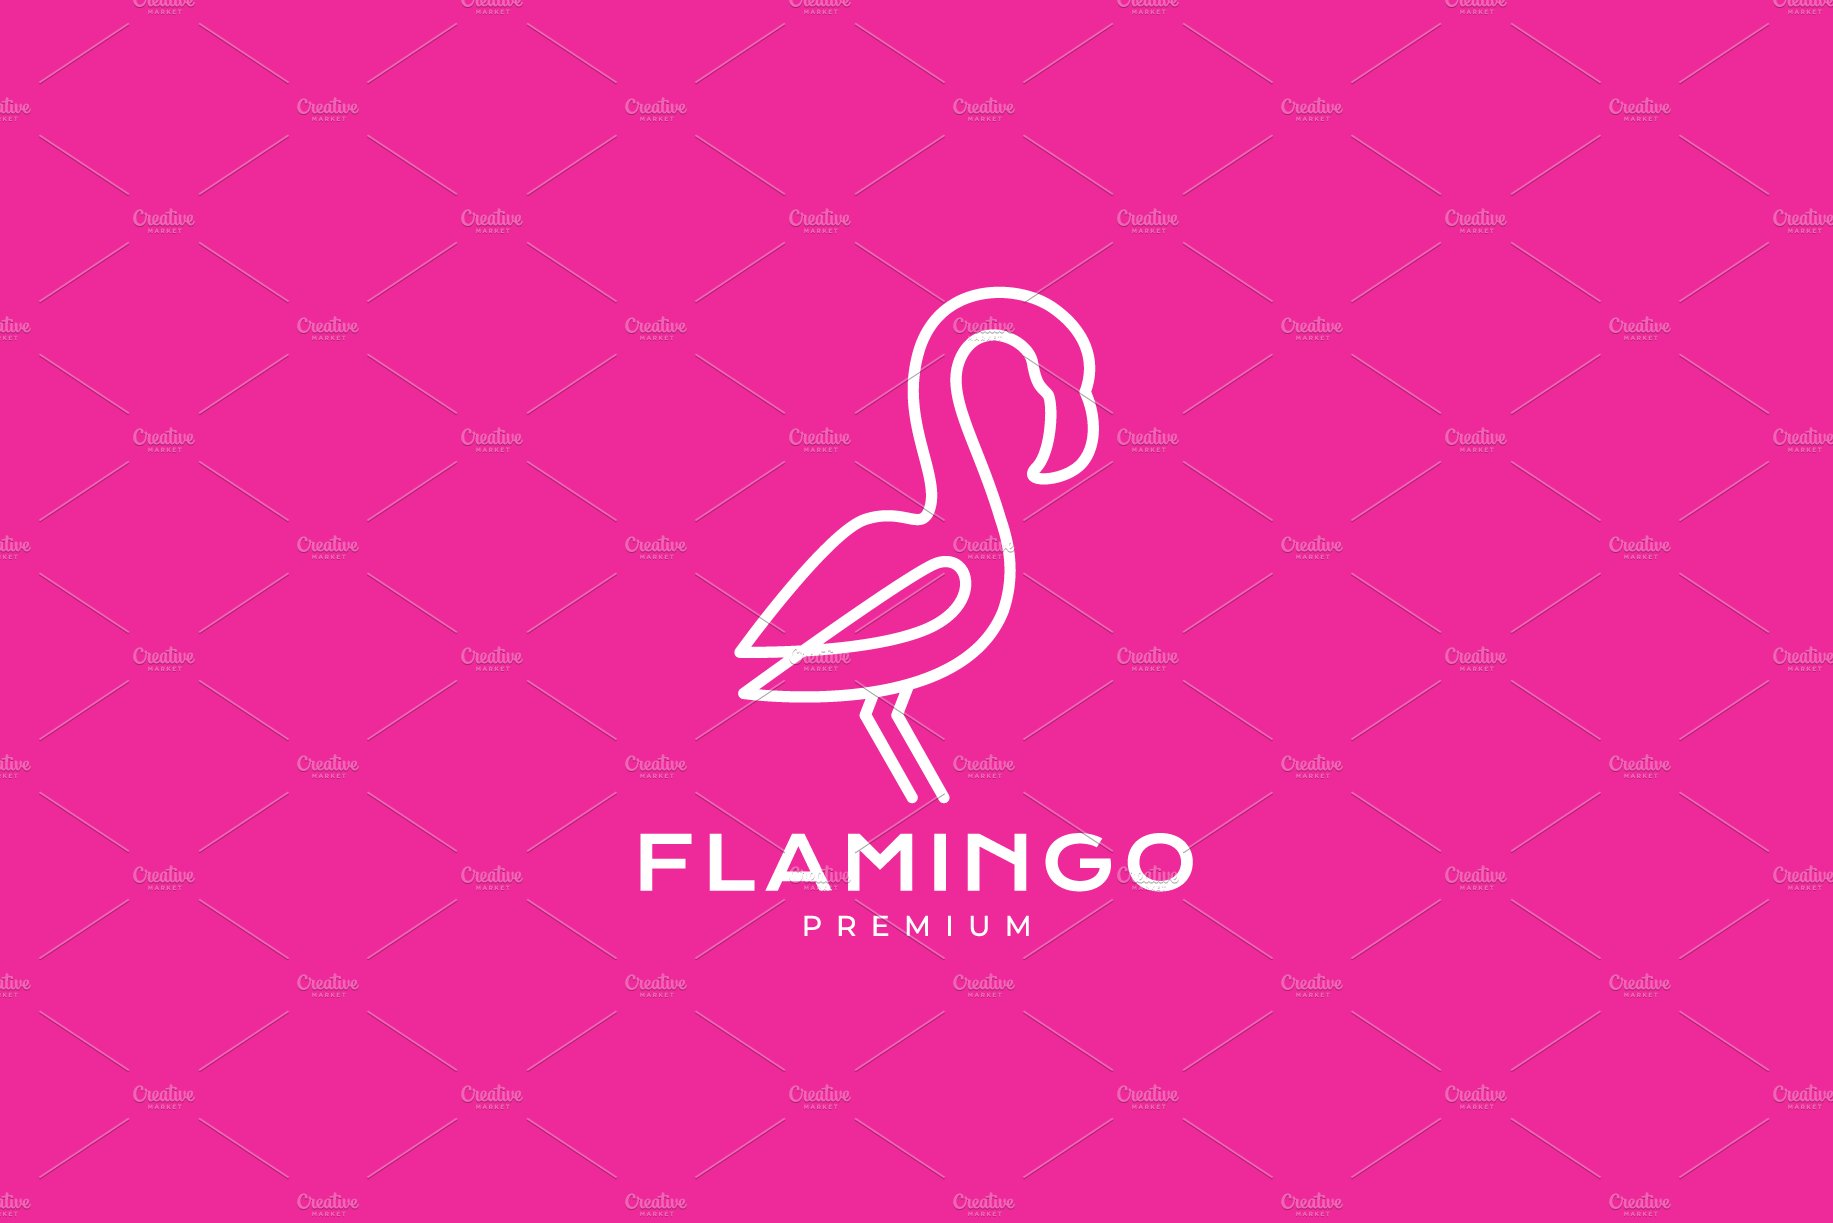 flamingo continuous line modern logo cover image.